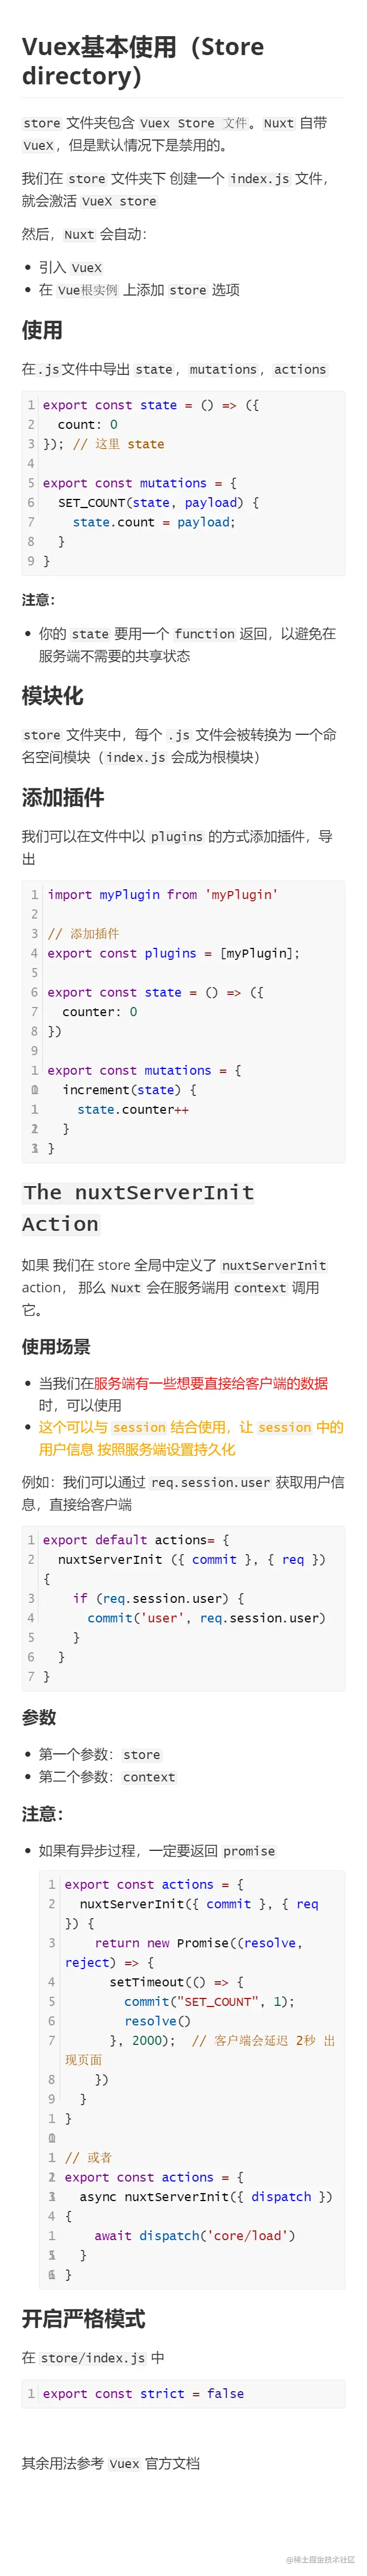 04-Nuxt中Vuex基本使用.png